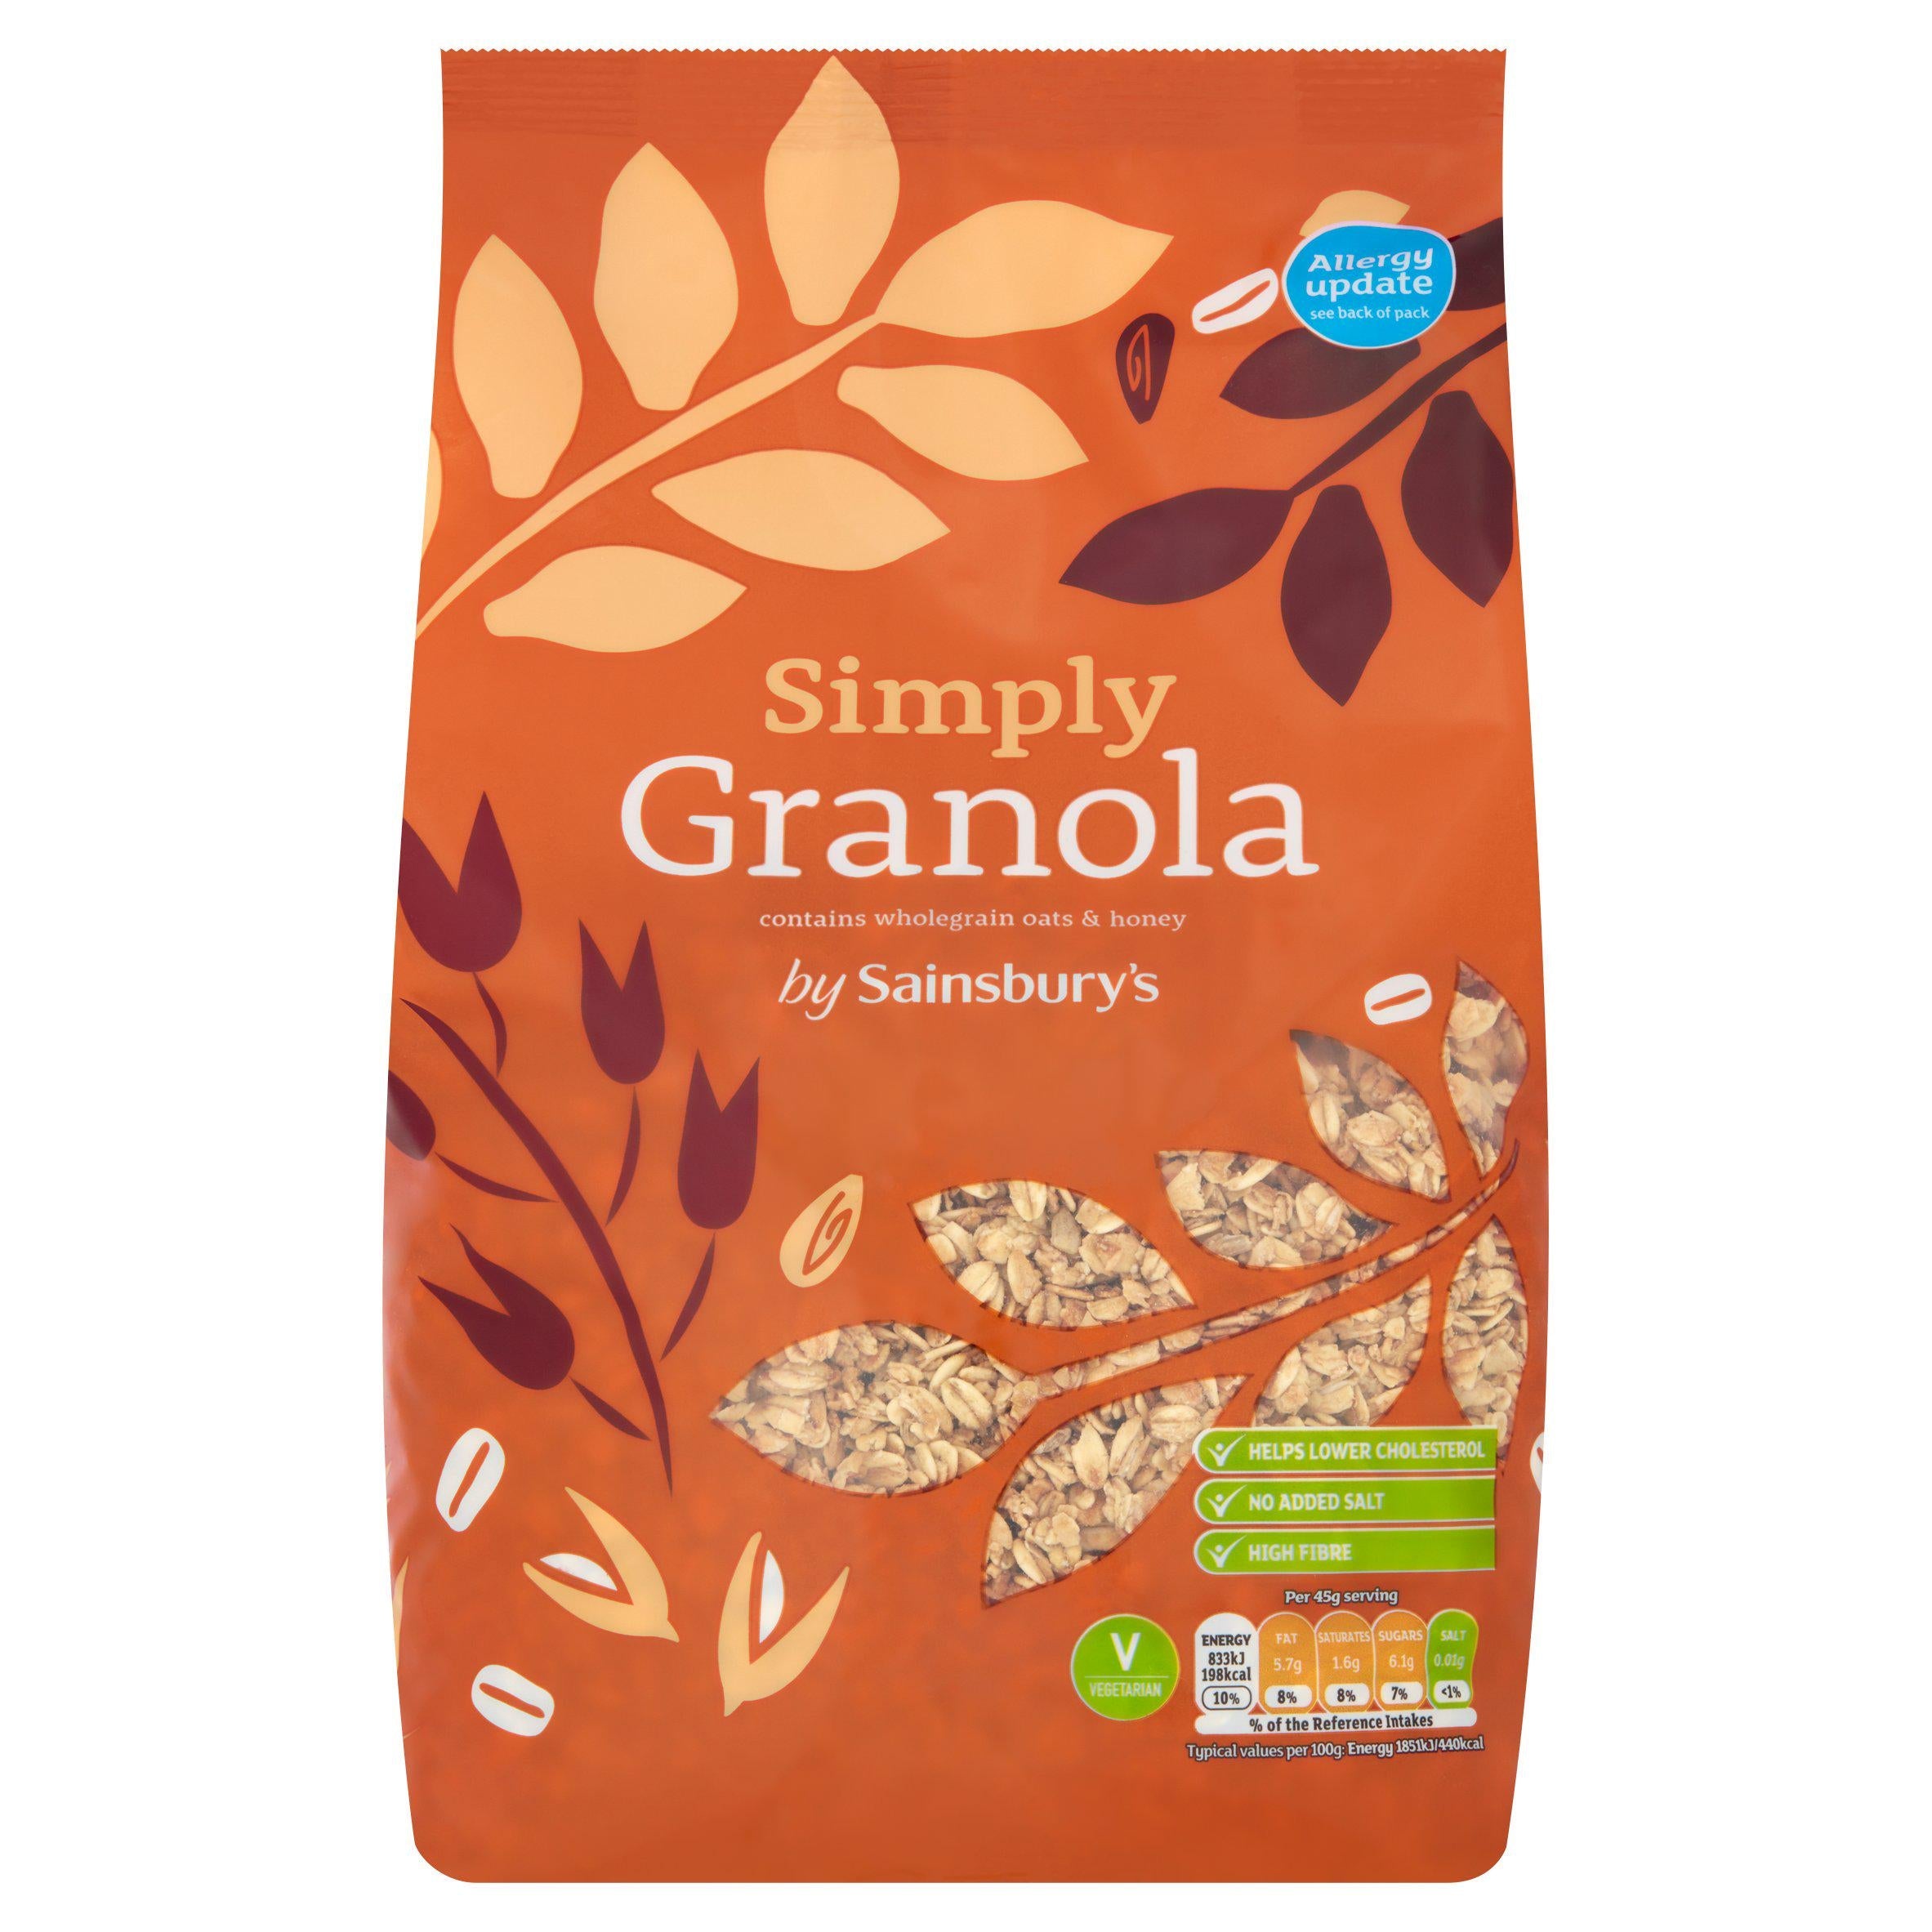 WSO - Sainsbury's Simply Granola 1kg 1x8